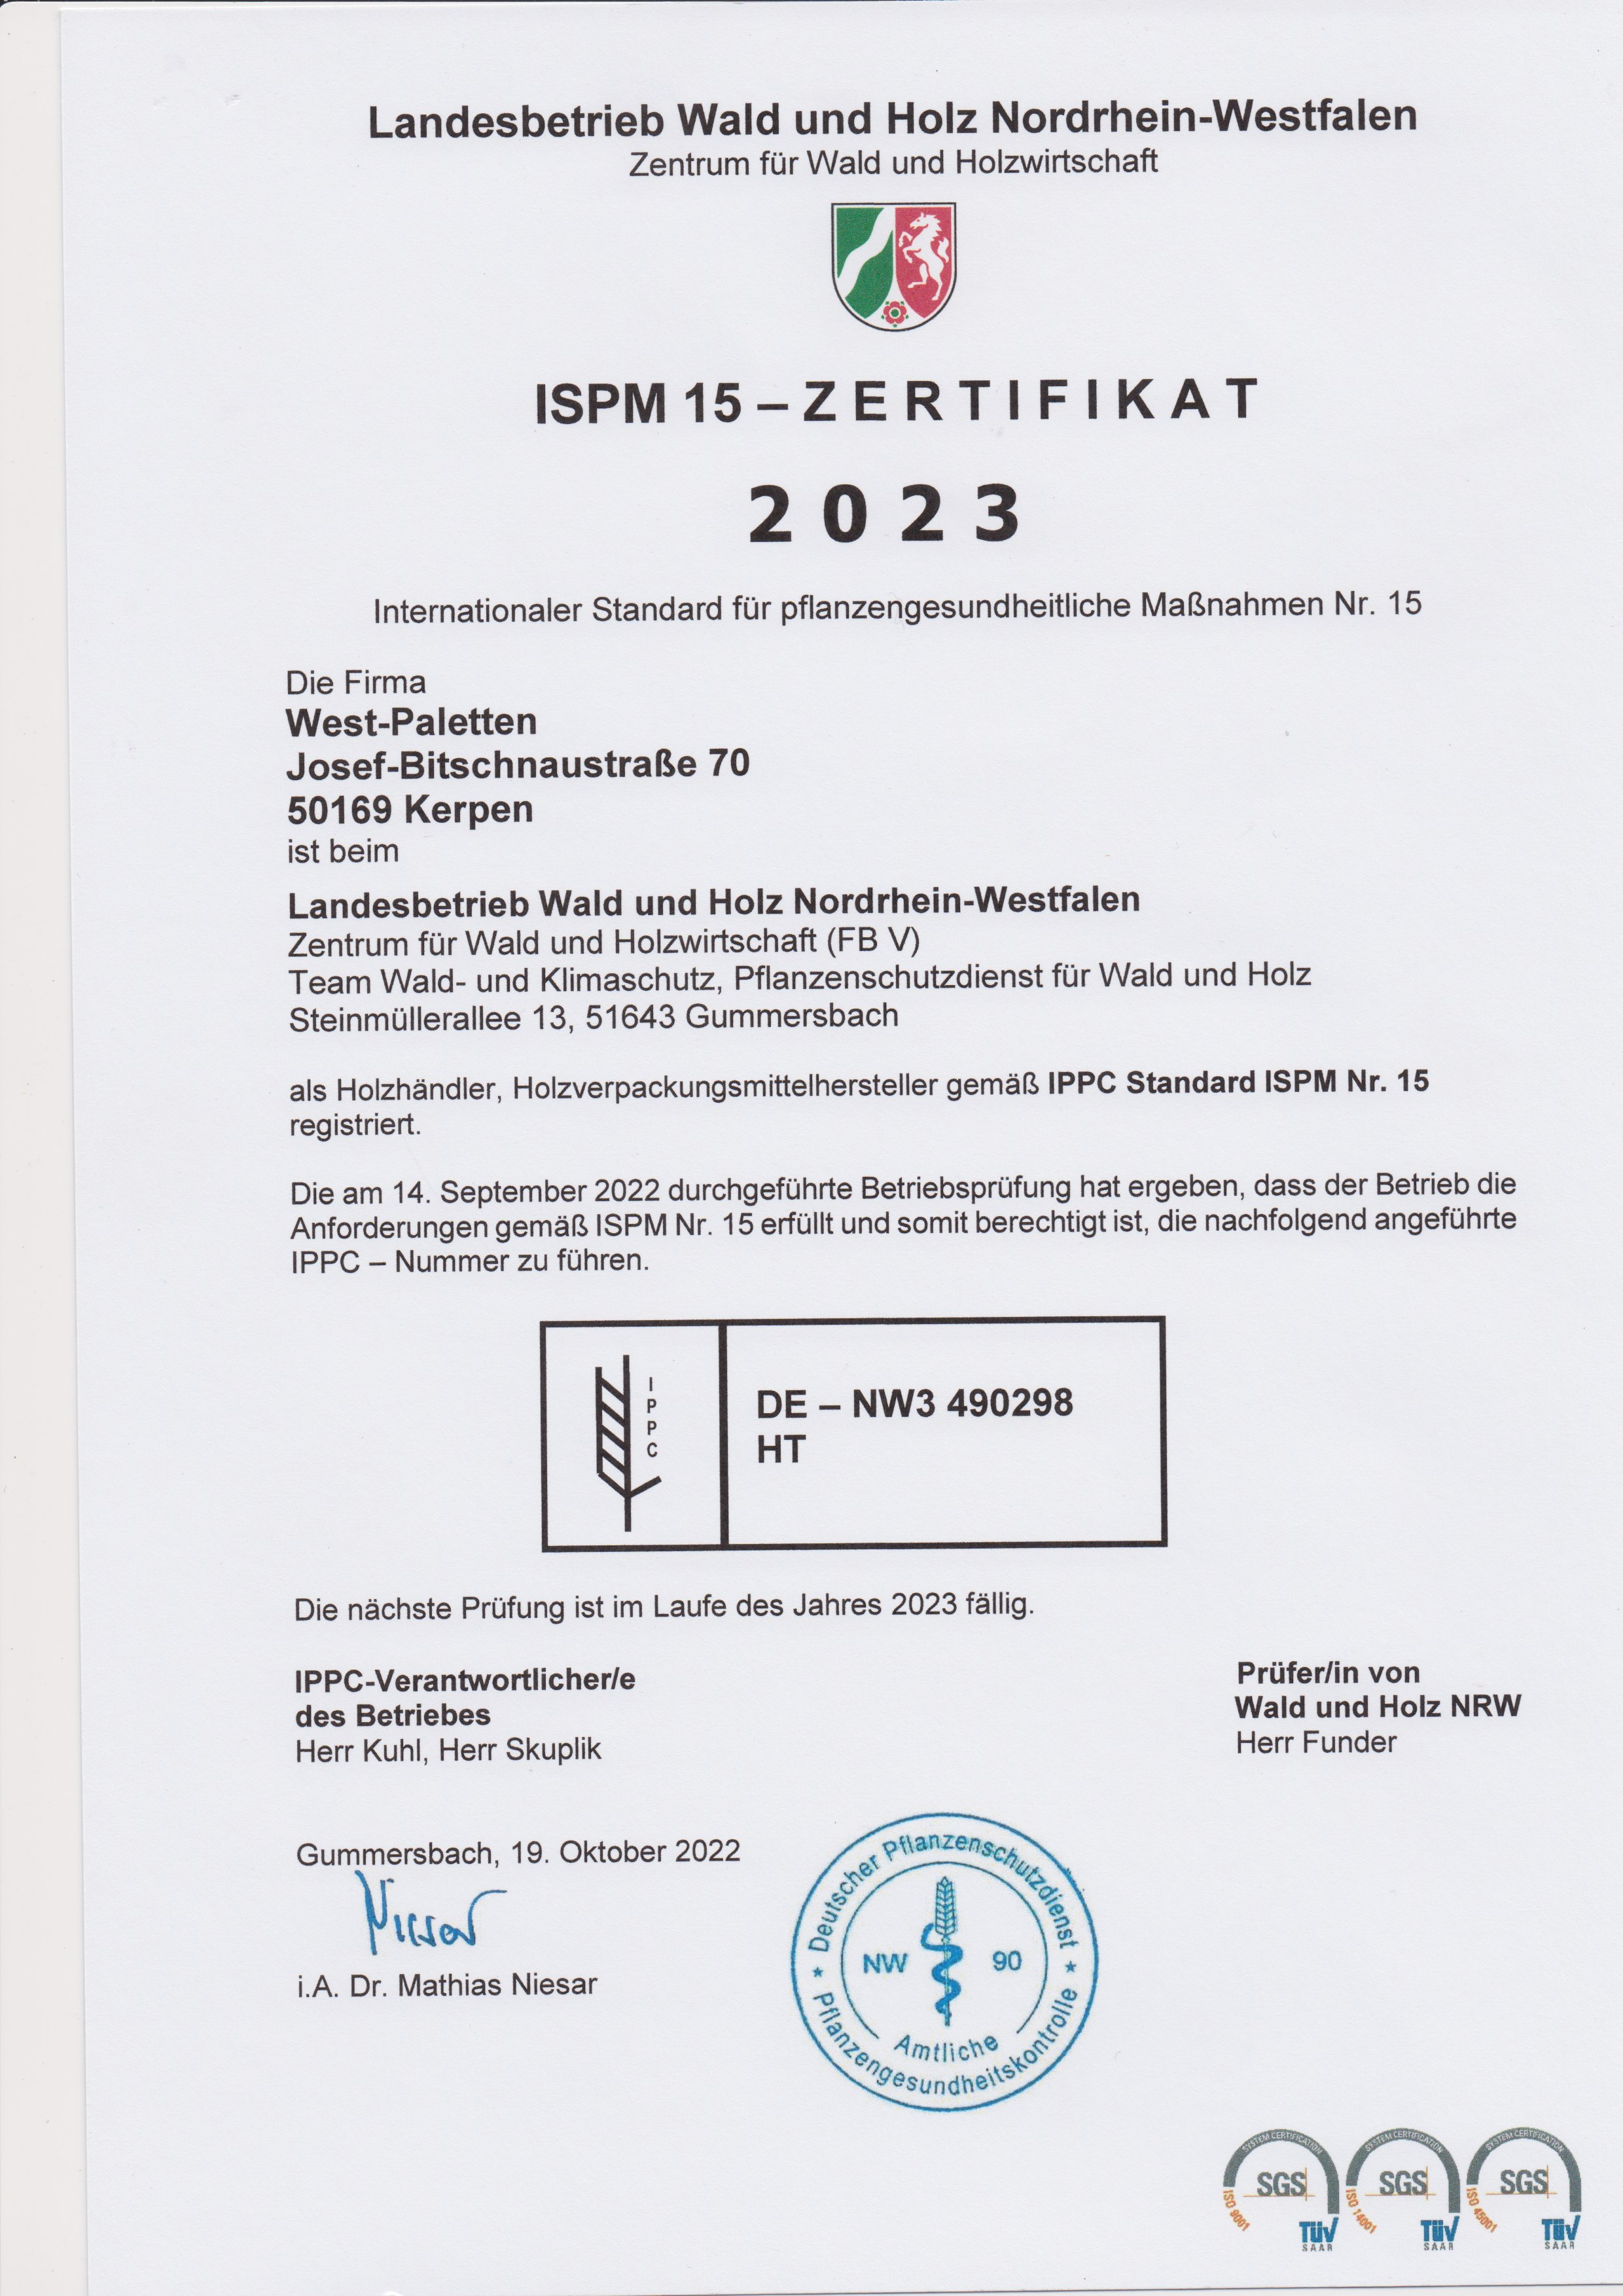 ISPM 15 - Zertifkat Wset Paletten Kerpen